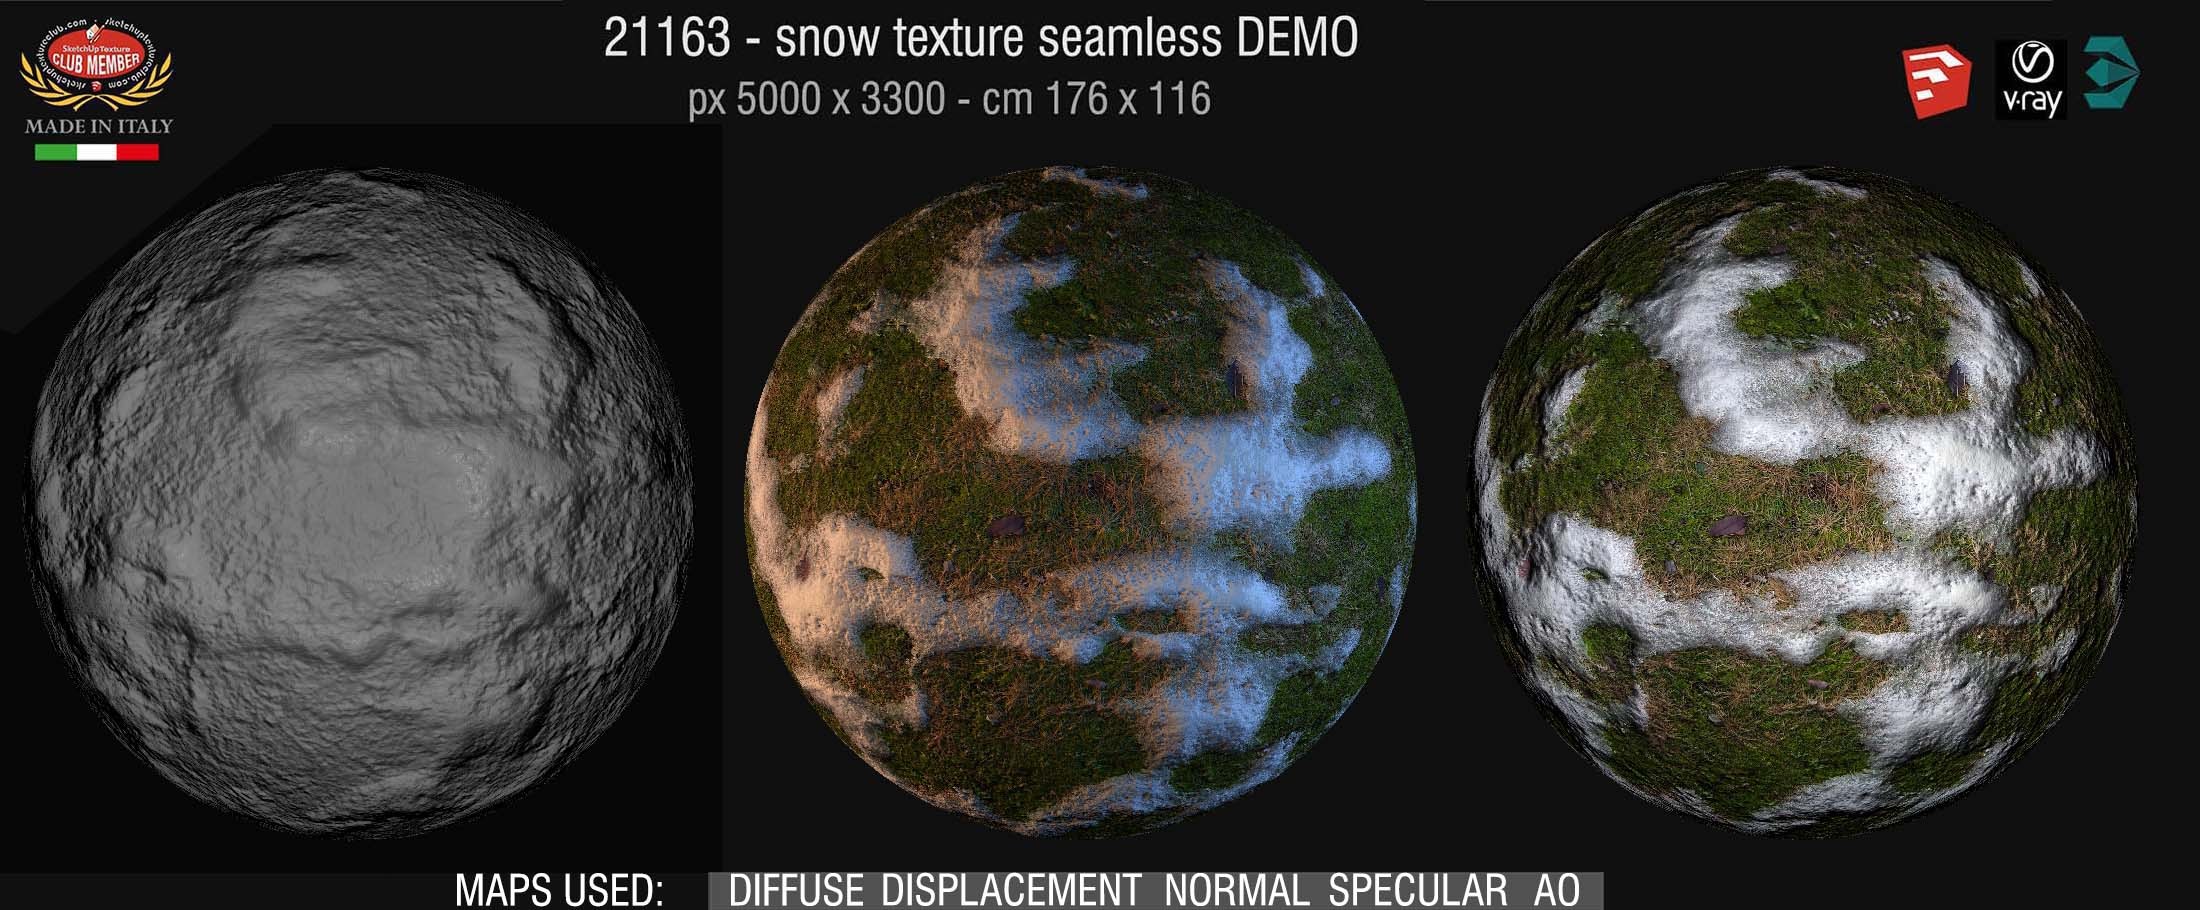 21163 Snow PBR texture seamless DEMO